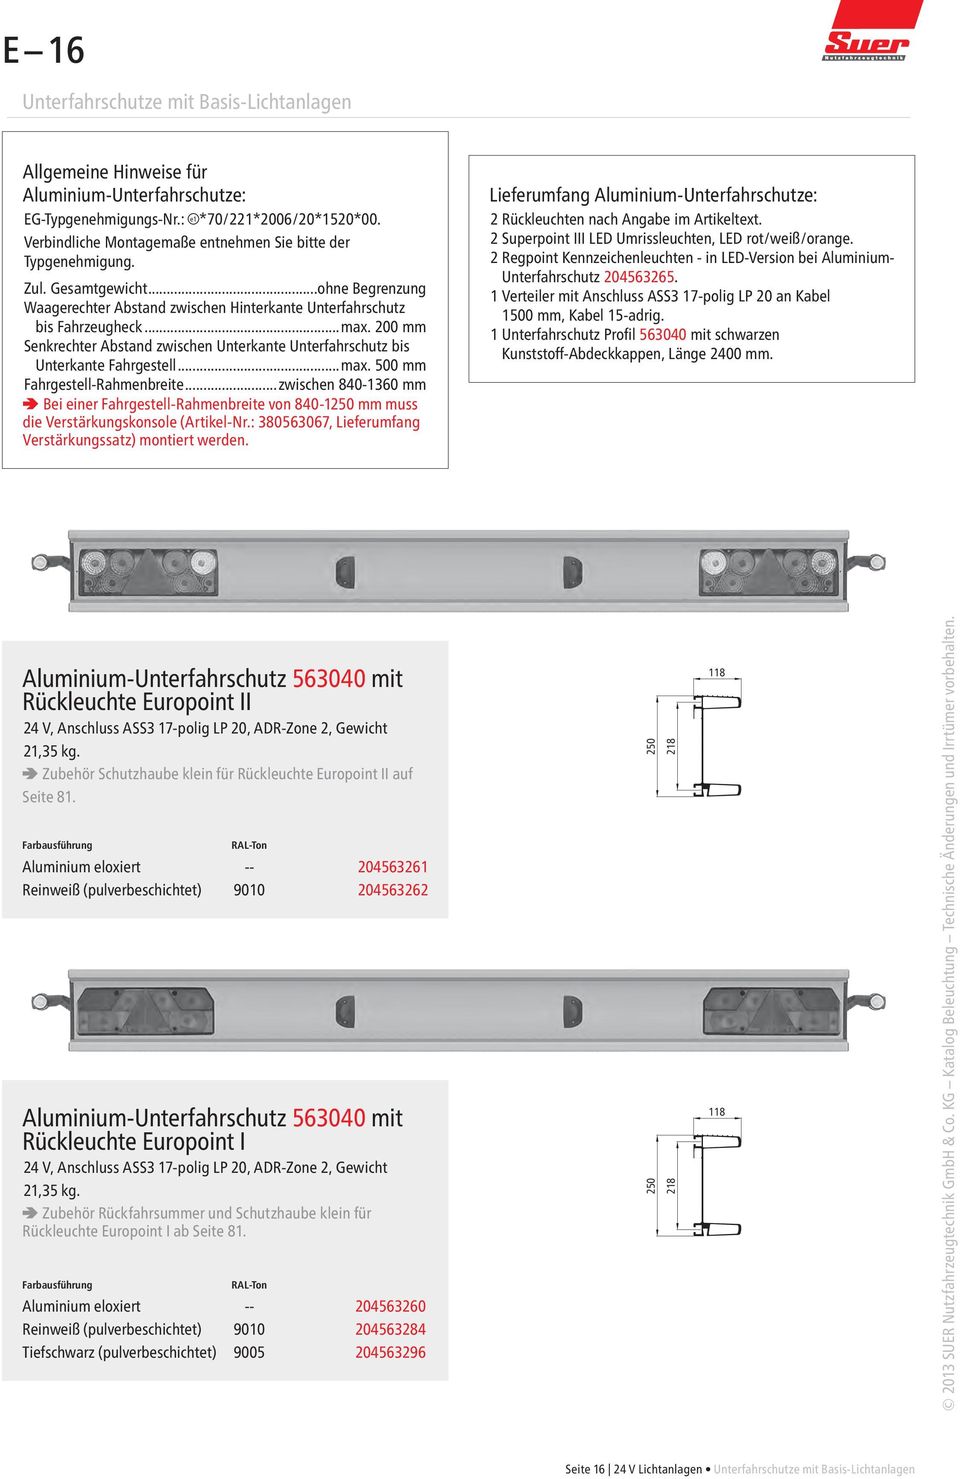 200 mm Senkrechter Abstand zwischen Unterkante Unterfahrschutz bis Unterkante Fahrgestell...max. 500 mm Fahrgestell-Rahmenbreite.